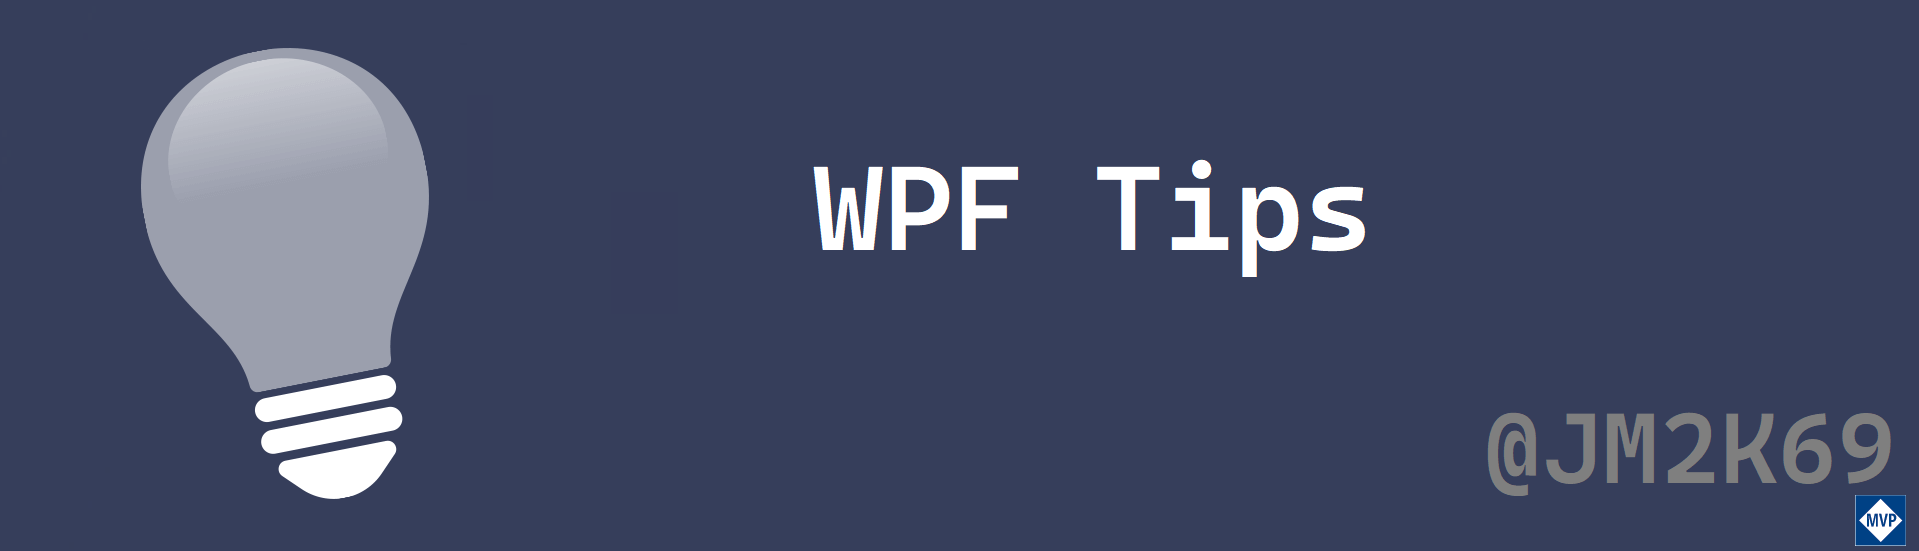 WPF Tips